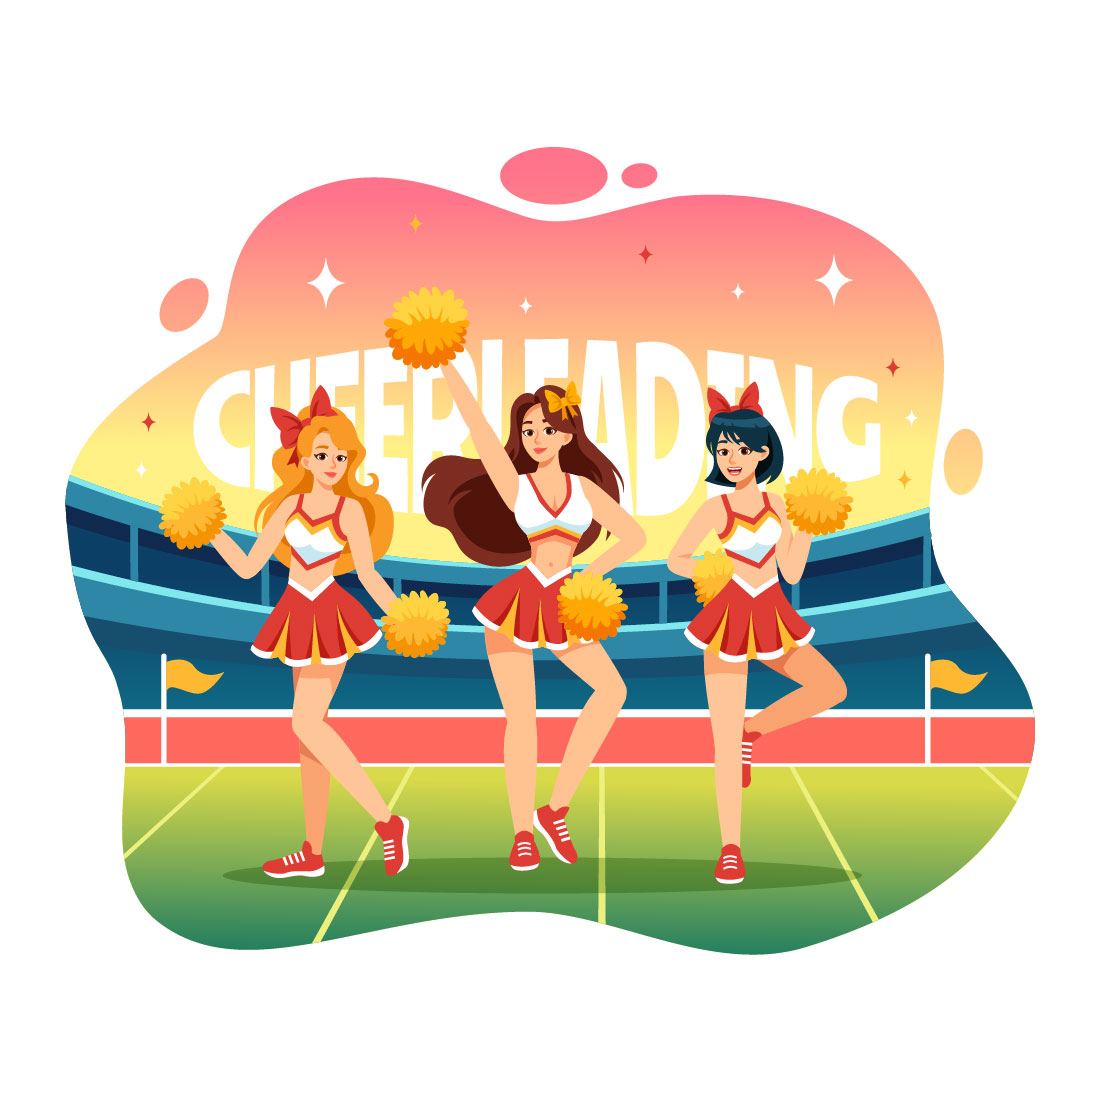 13 Cheerleader Girl Illustration preview image.